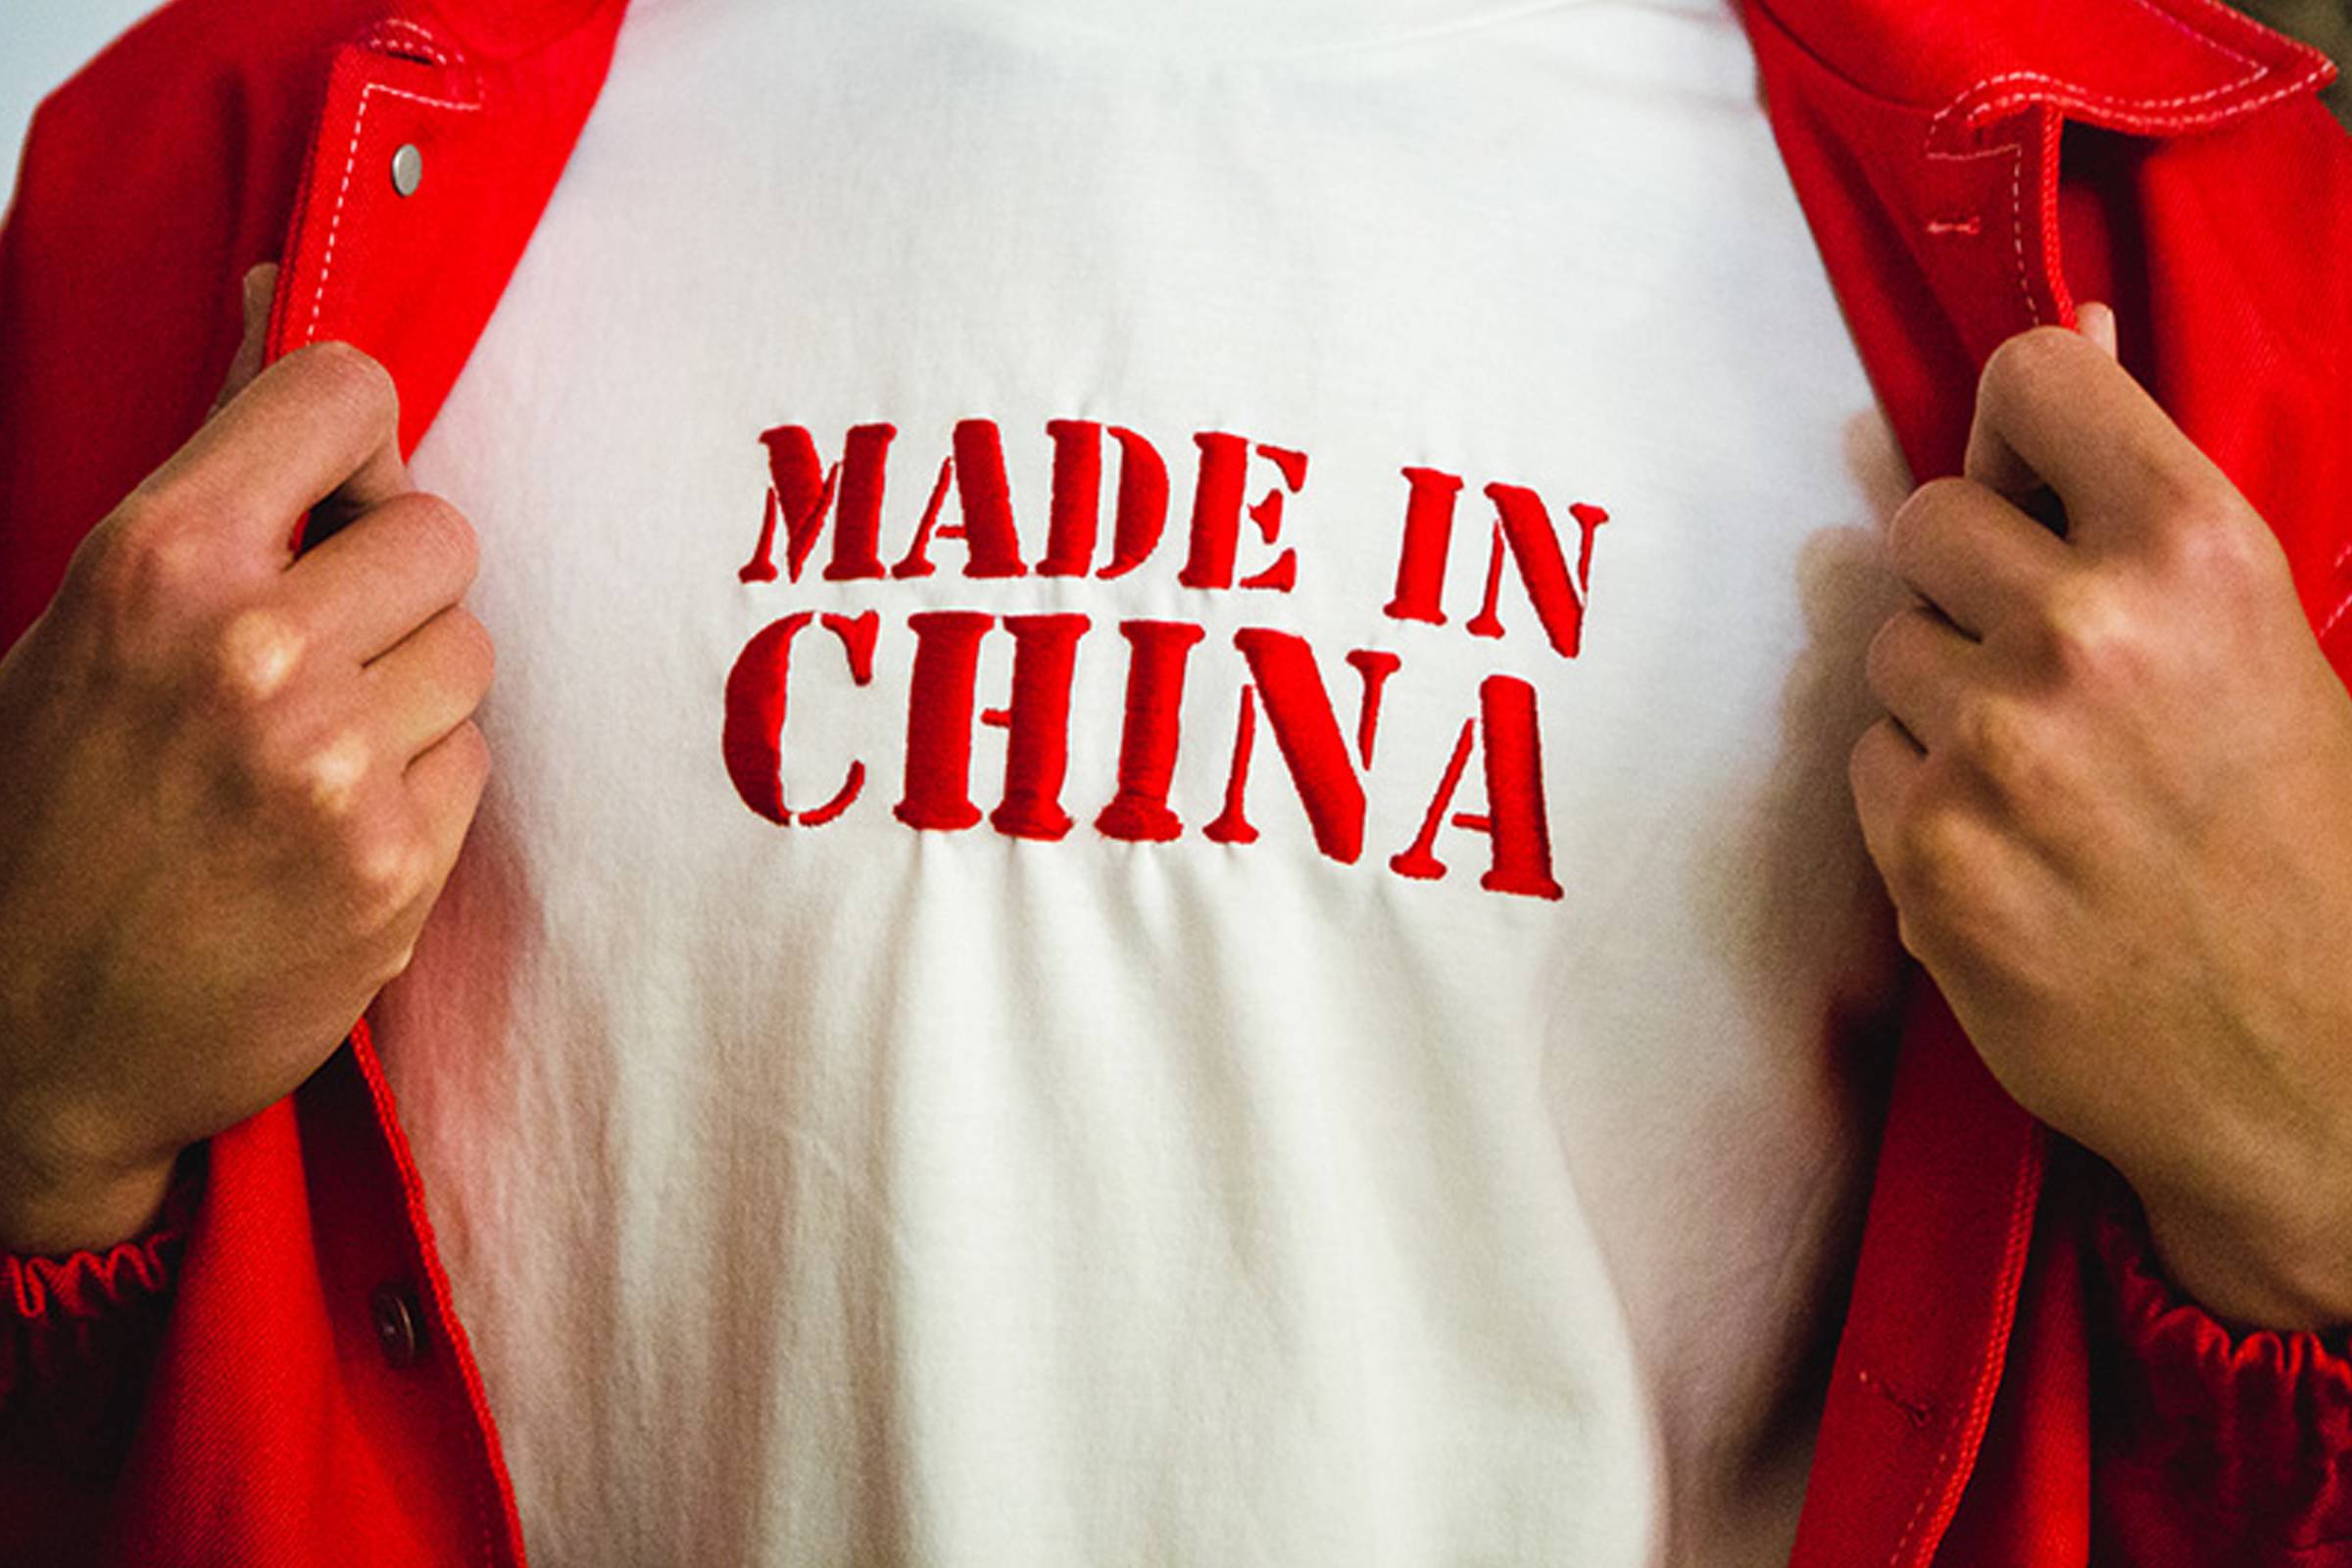 Made in china. Футболка made in China. Личный бренд с Китаем.